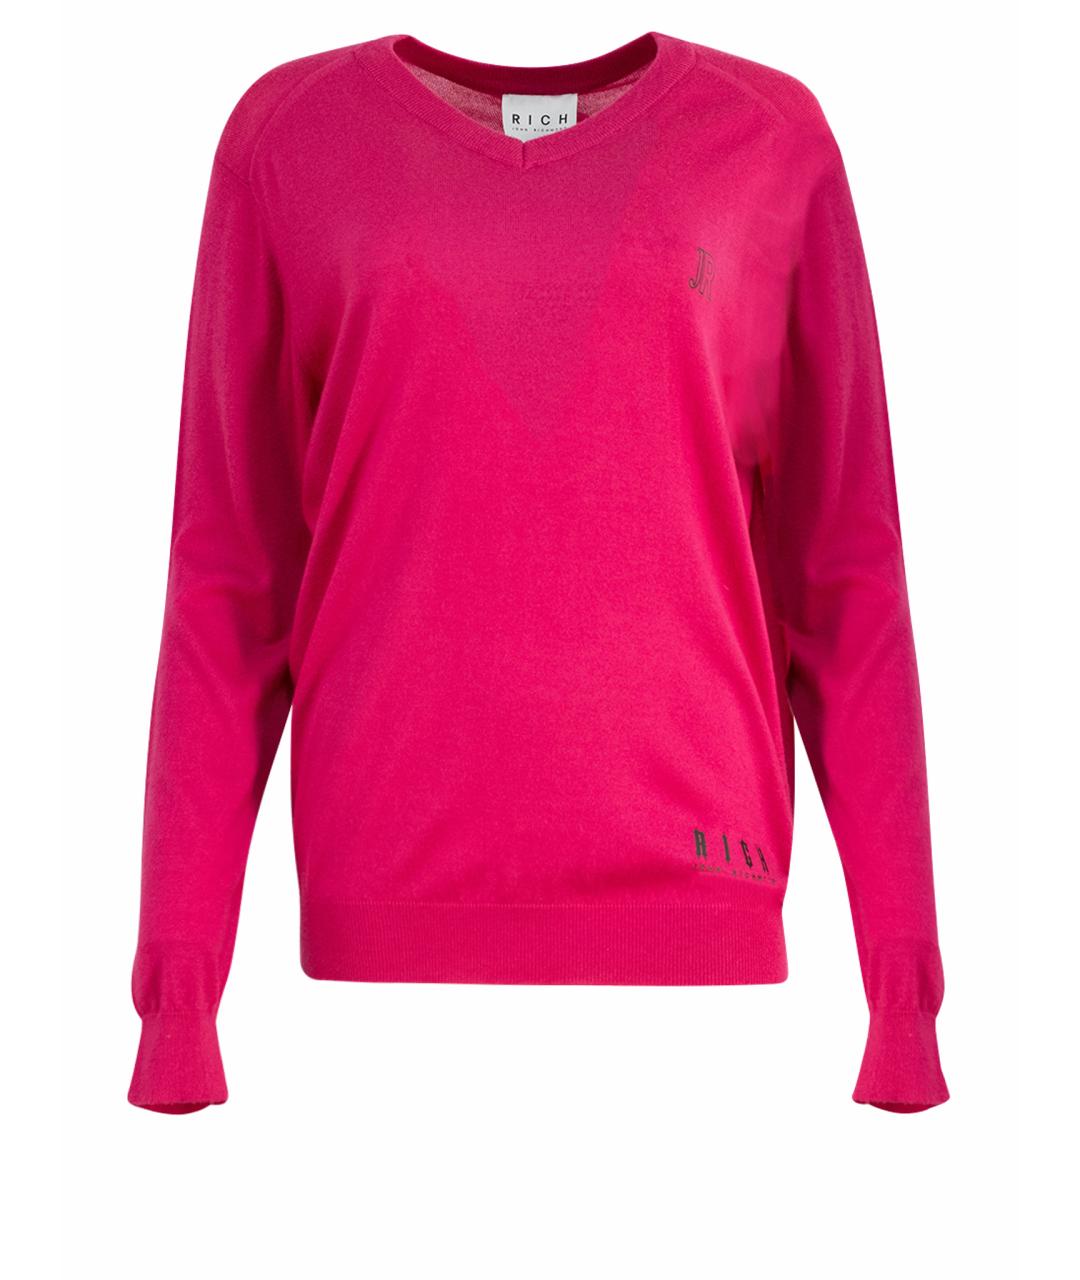 JOHN RICHMOND Розовый шерстяной джемпер / свитер, фото 1